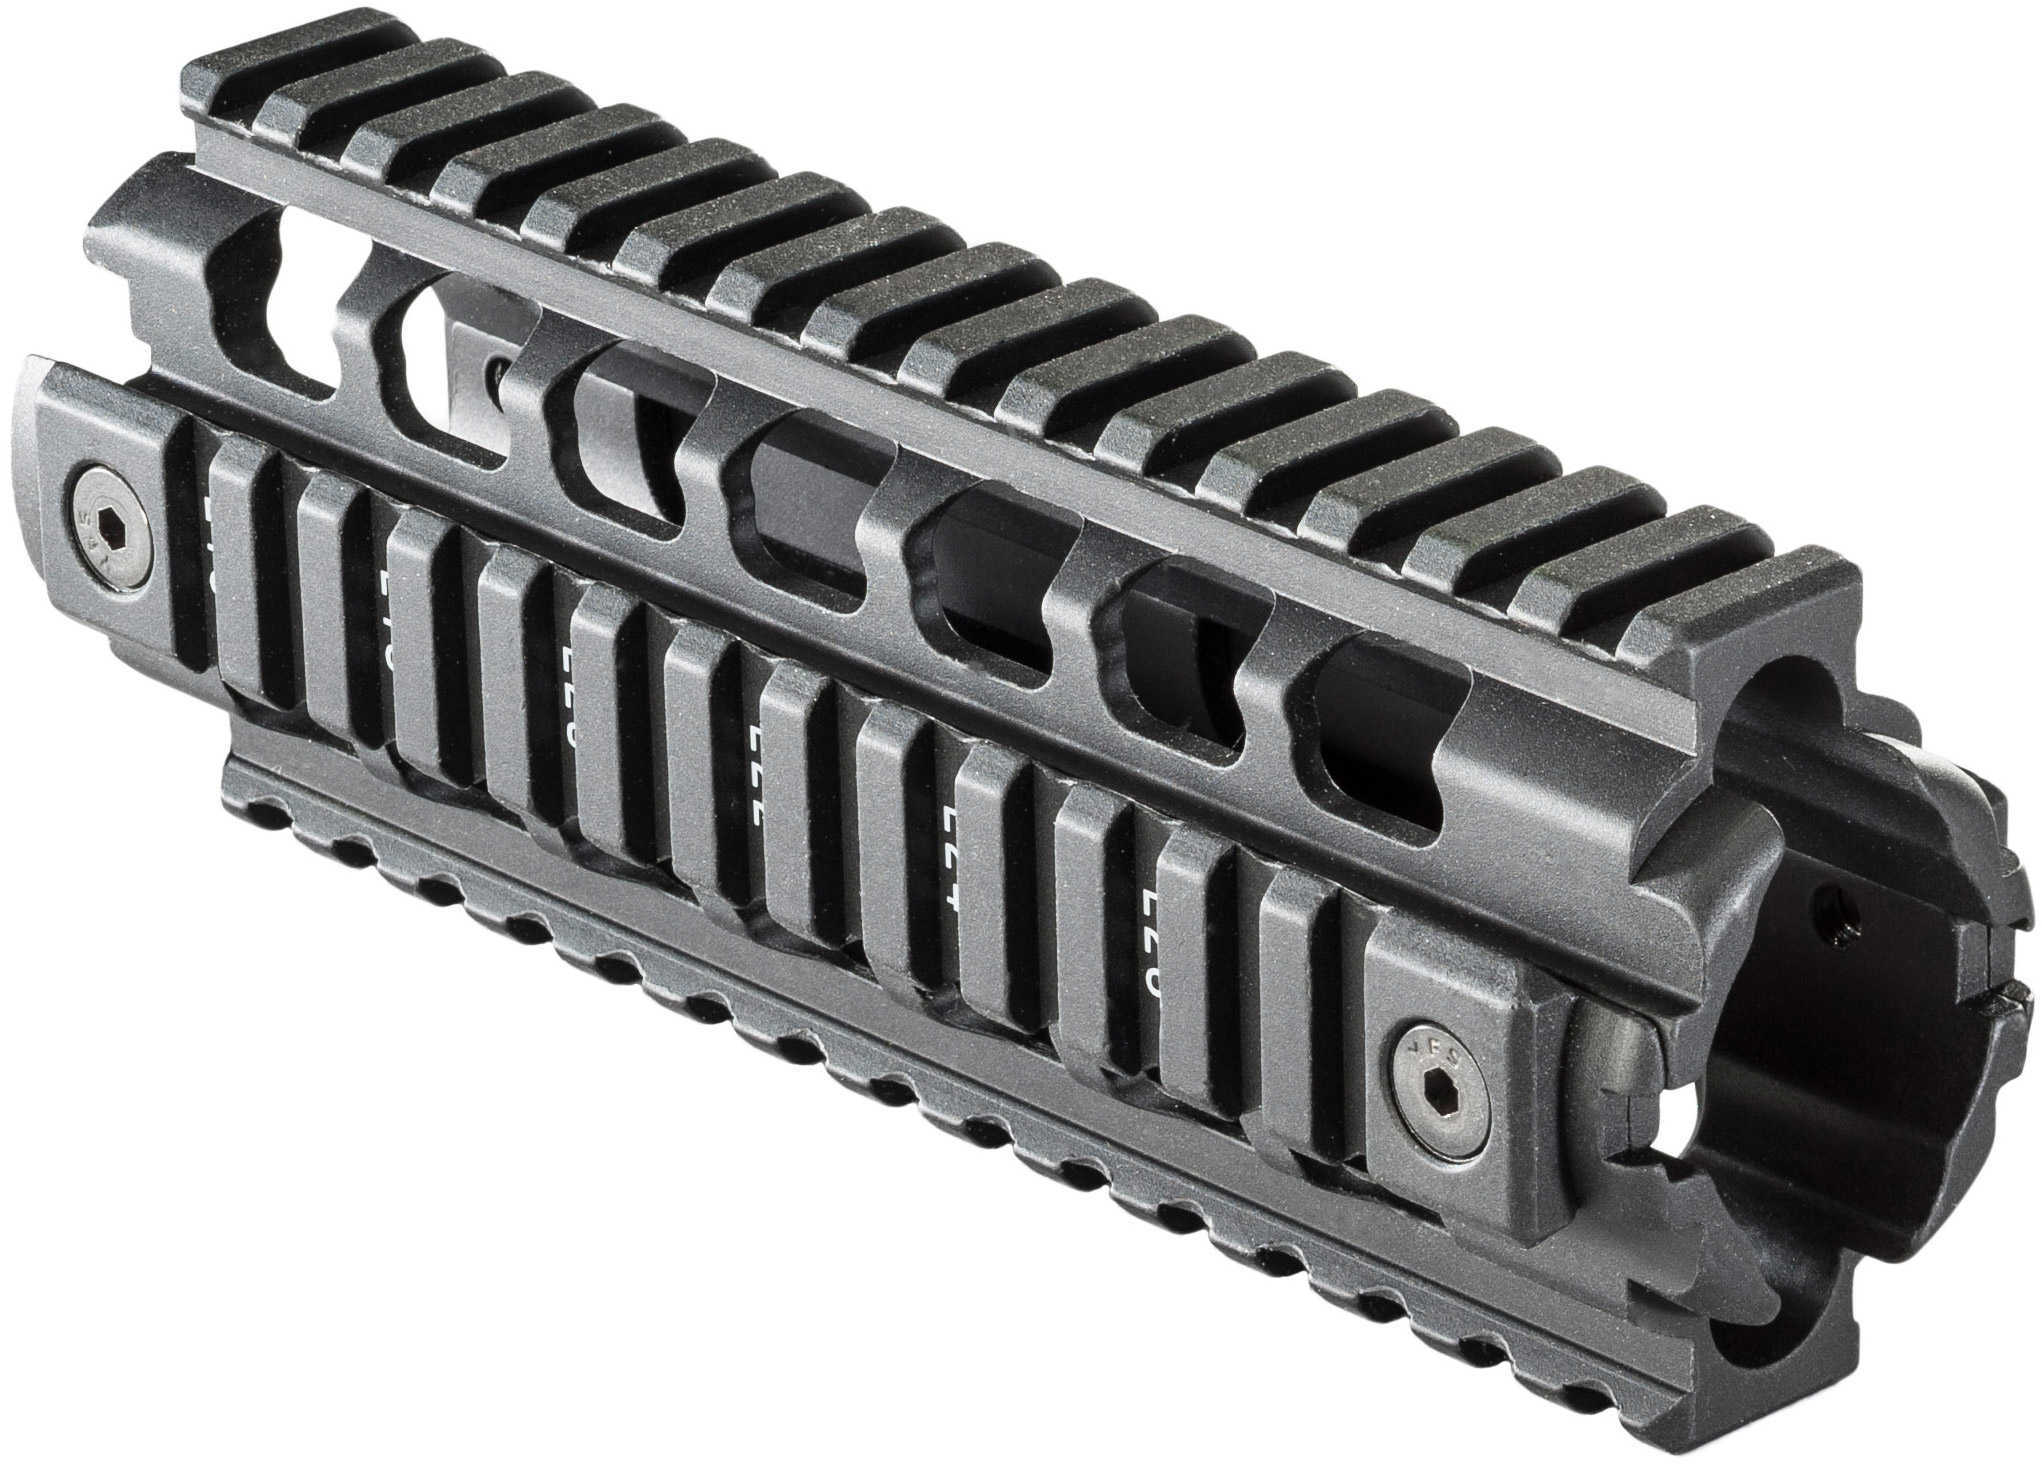 Ergo Grip Rail Black Hard Anodized Aluminum Compatible With Carbine lenght AR Piston System 4811-P